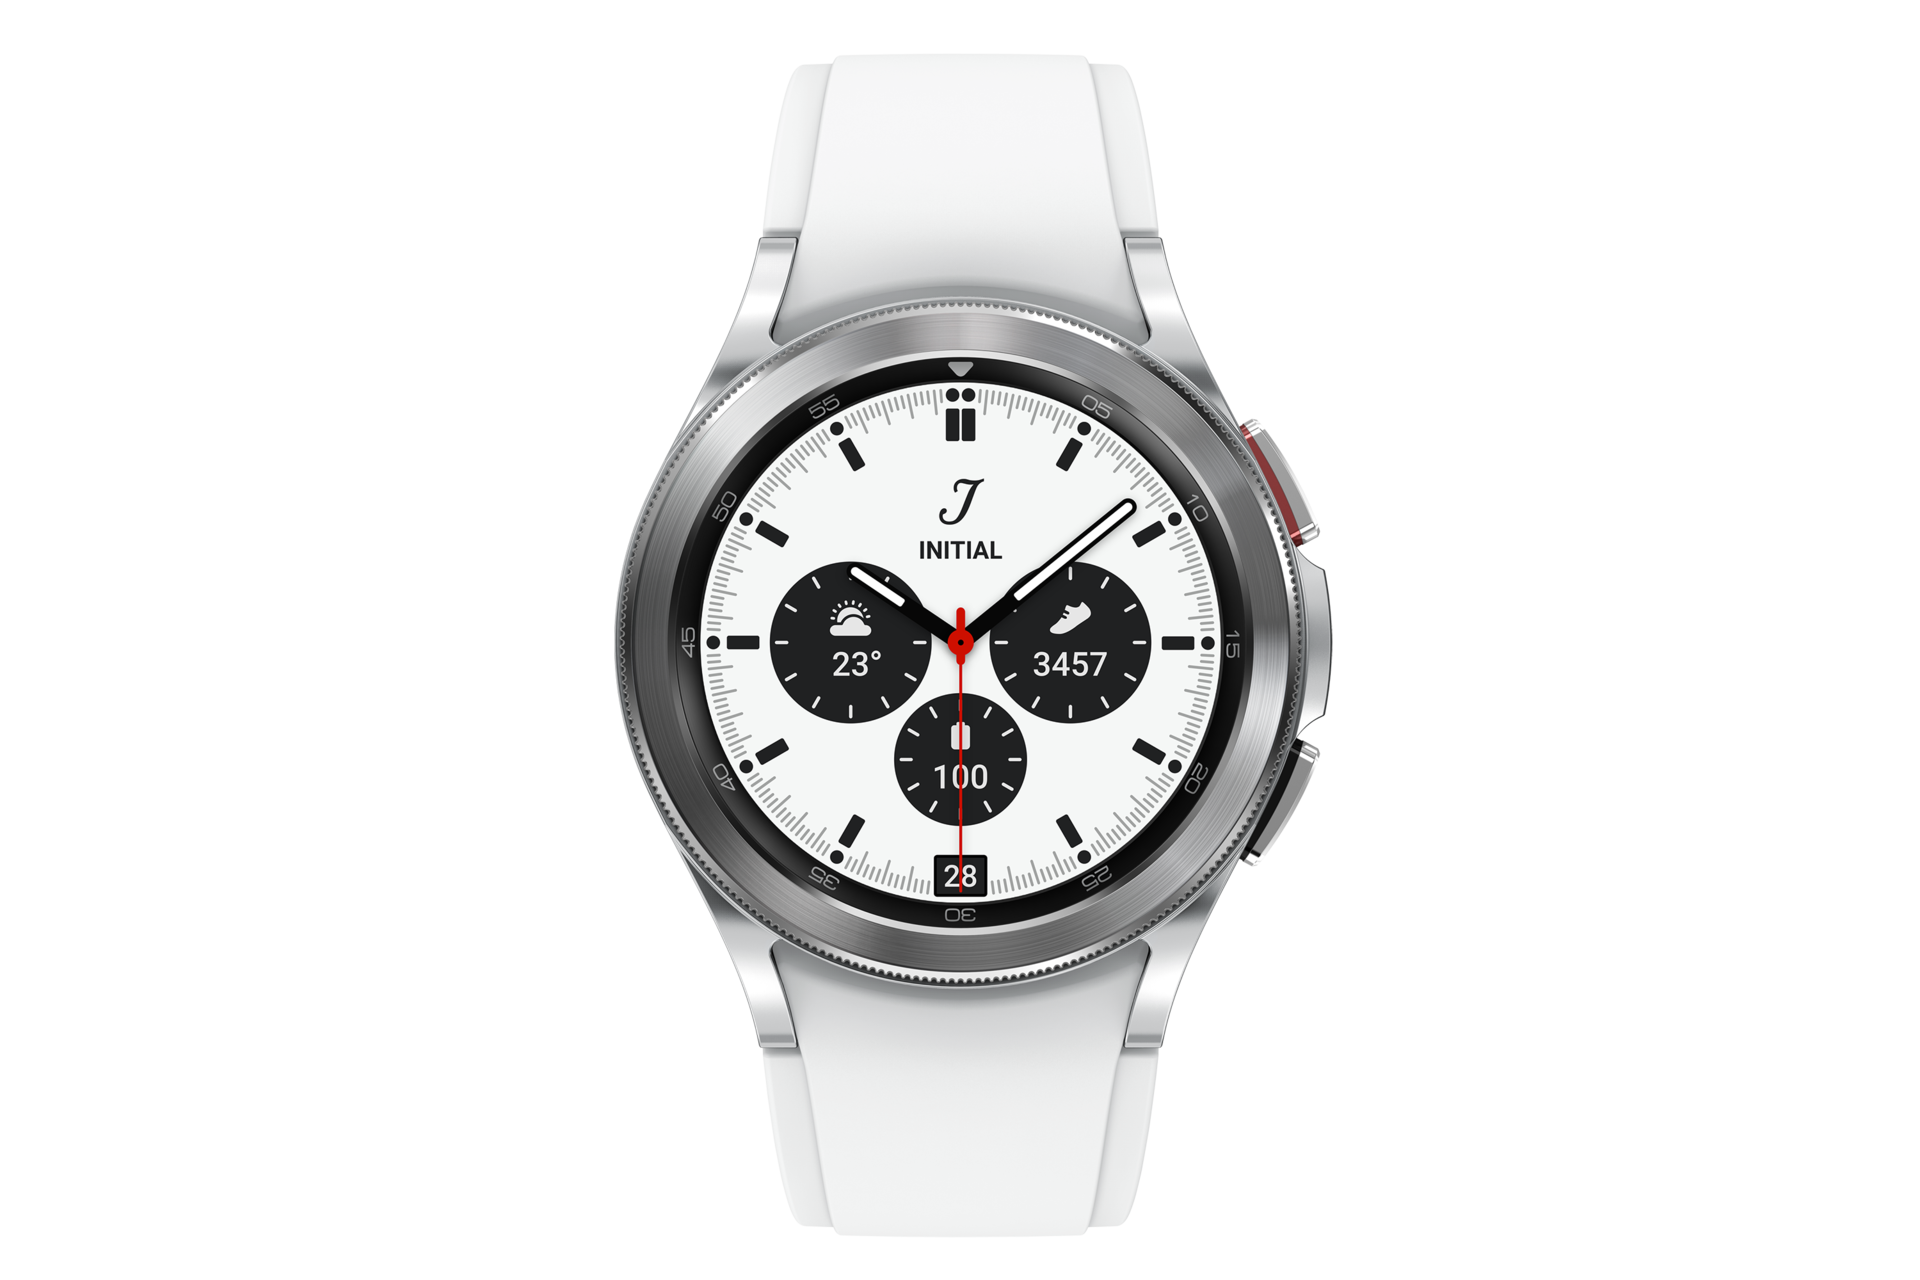 Samsung Galaxy Watch4 Classic 42mm Smart Watch, Bluetooth, Silver